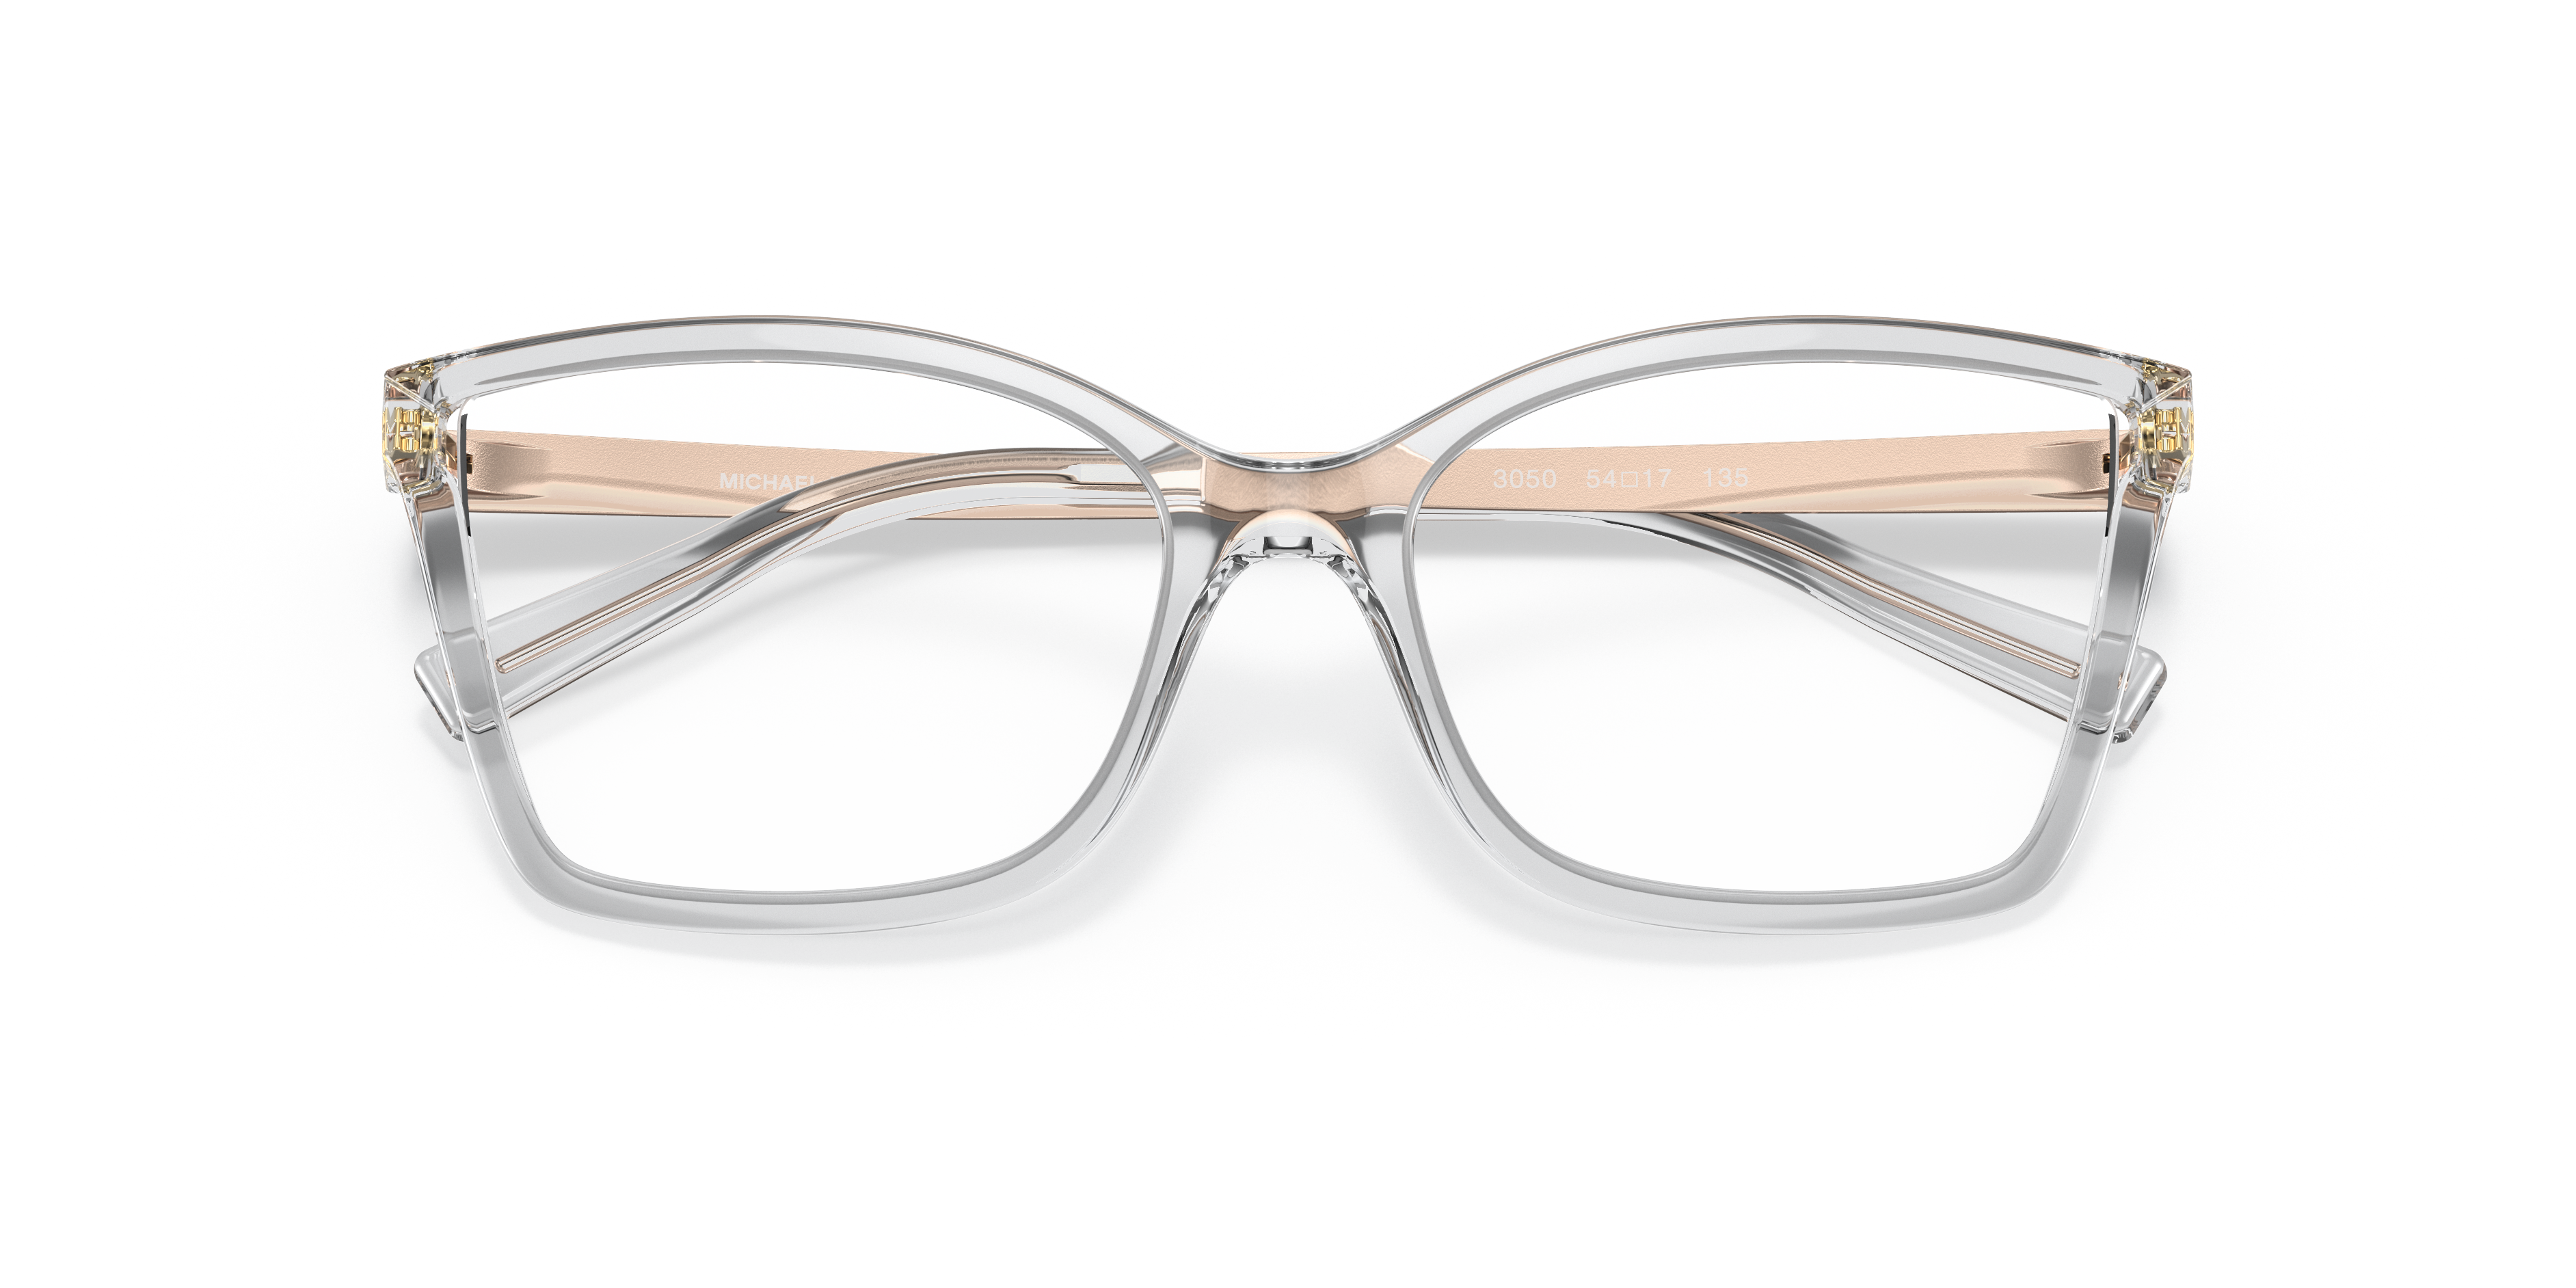 Michael Kors Glasses Lenscrafters Sale Online 51 OFF   wwwbridgepartnersllccom